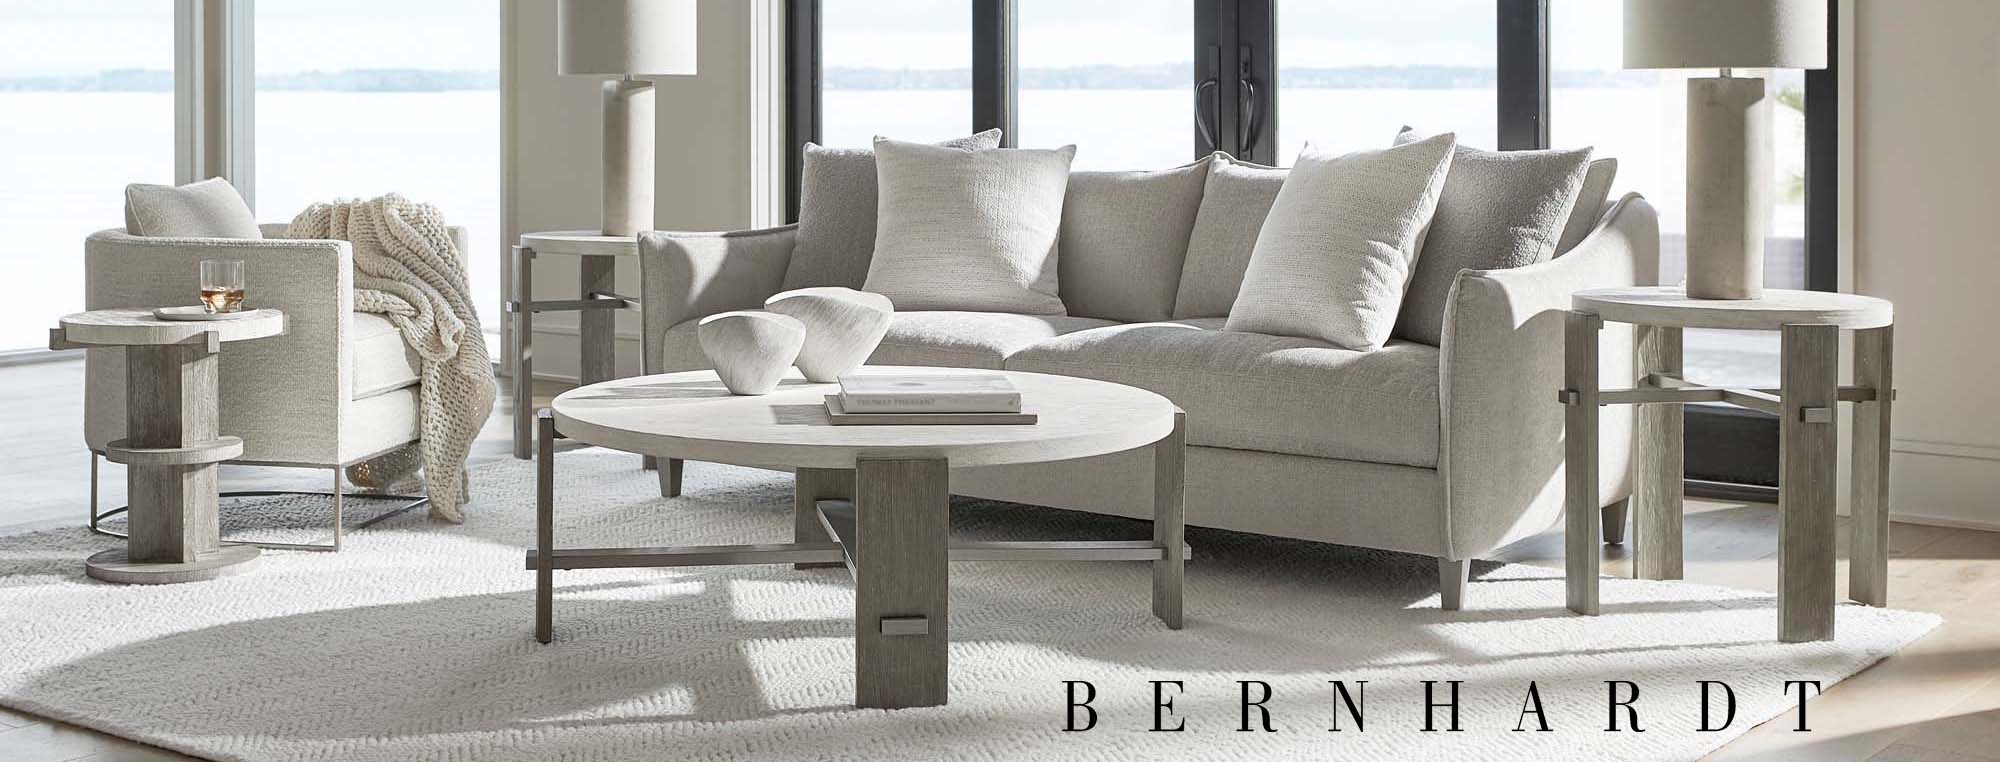 Bernhardt Furniture for Homethreads